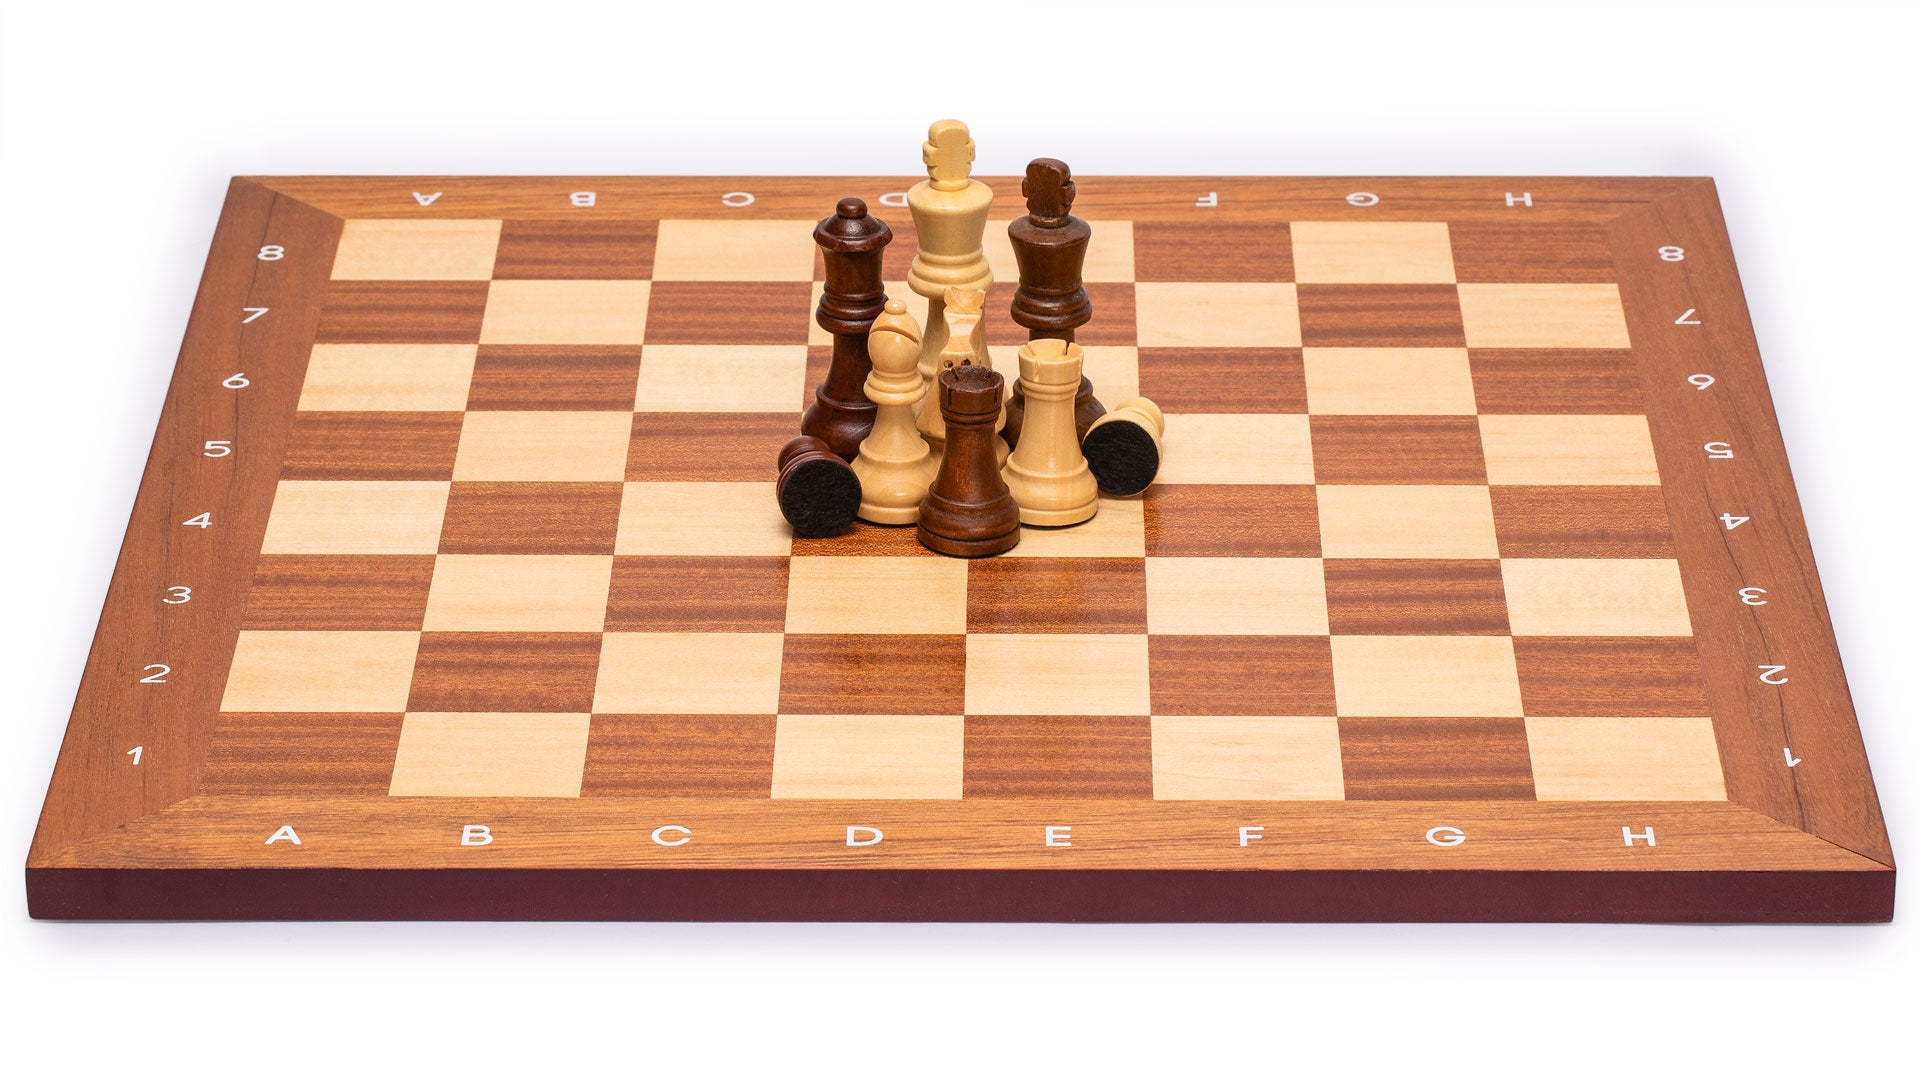 Husaria Professional Staunton Tournament Chess Board, No. 5, 18.9"-Husaria